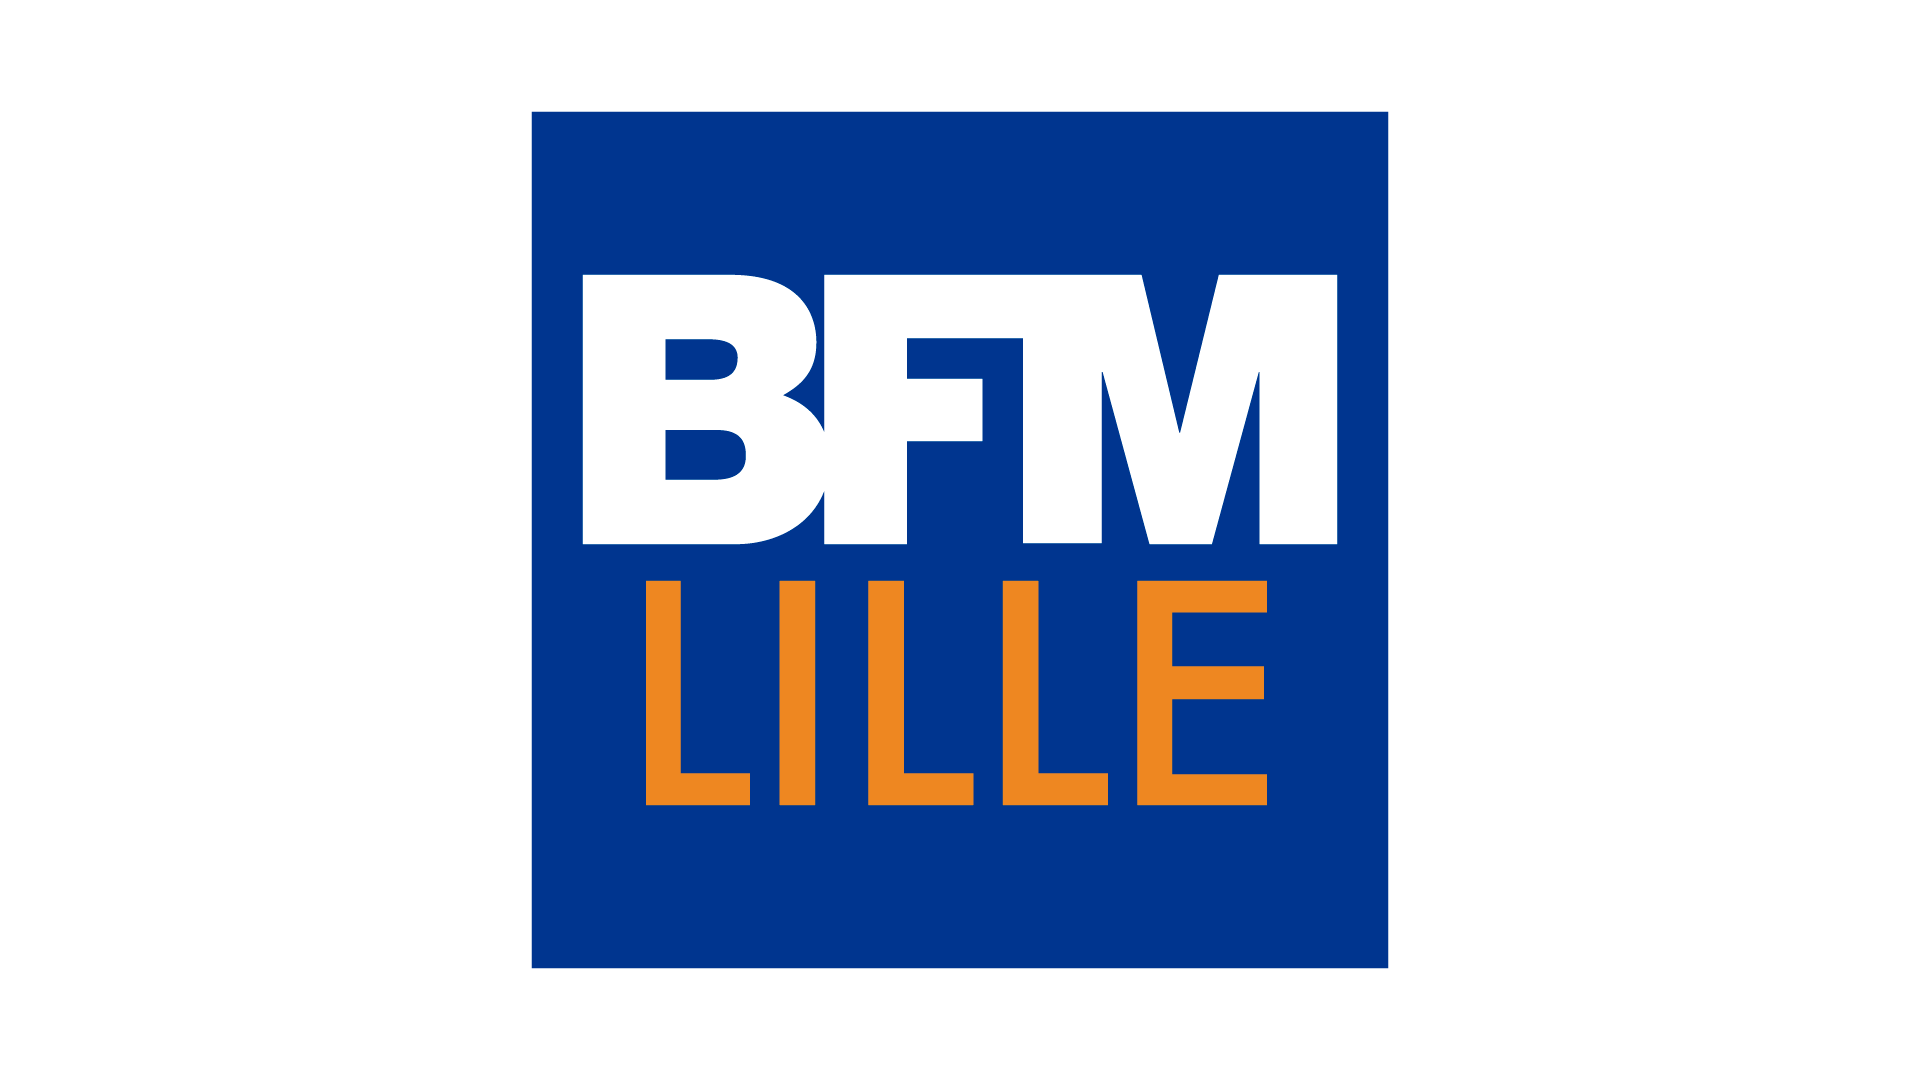 BFM-Grand-Lille-TV-en-direct